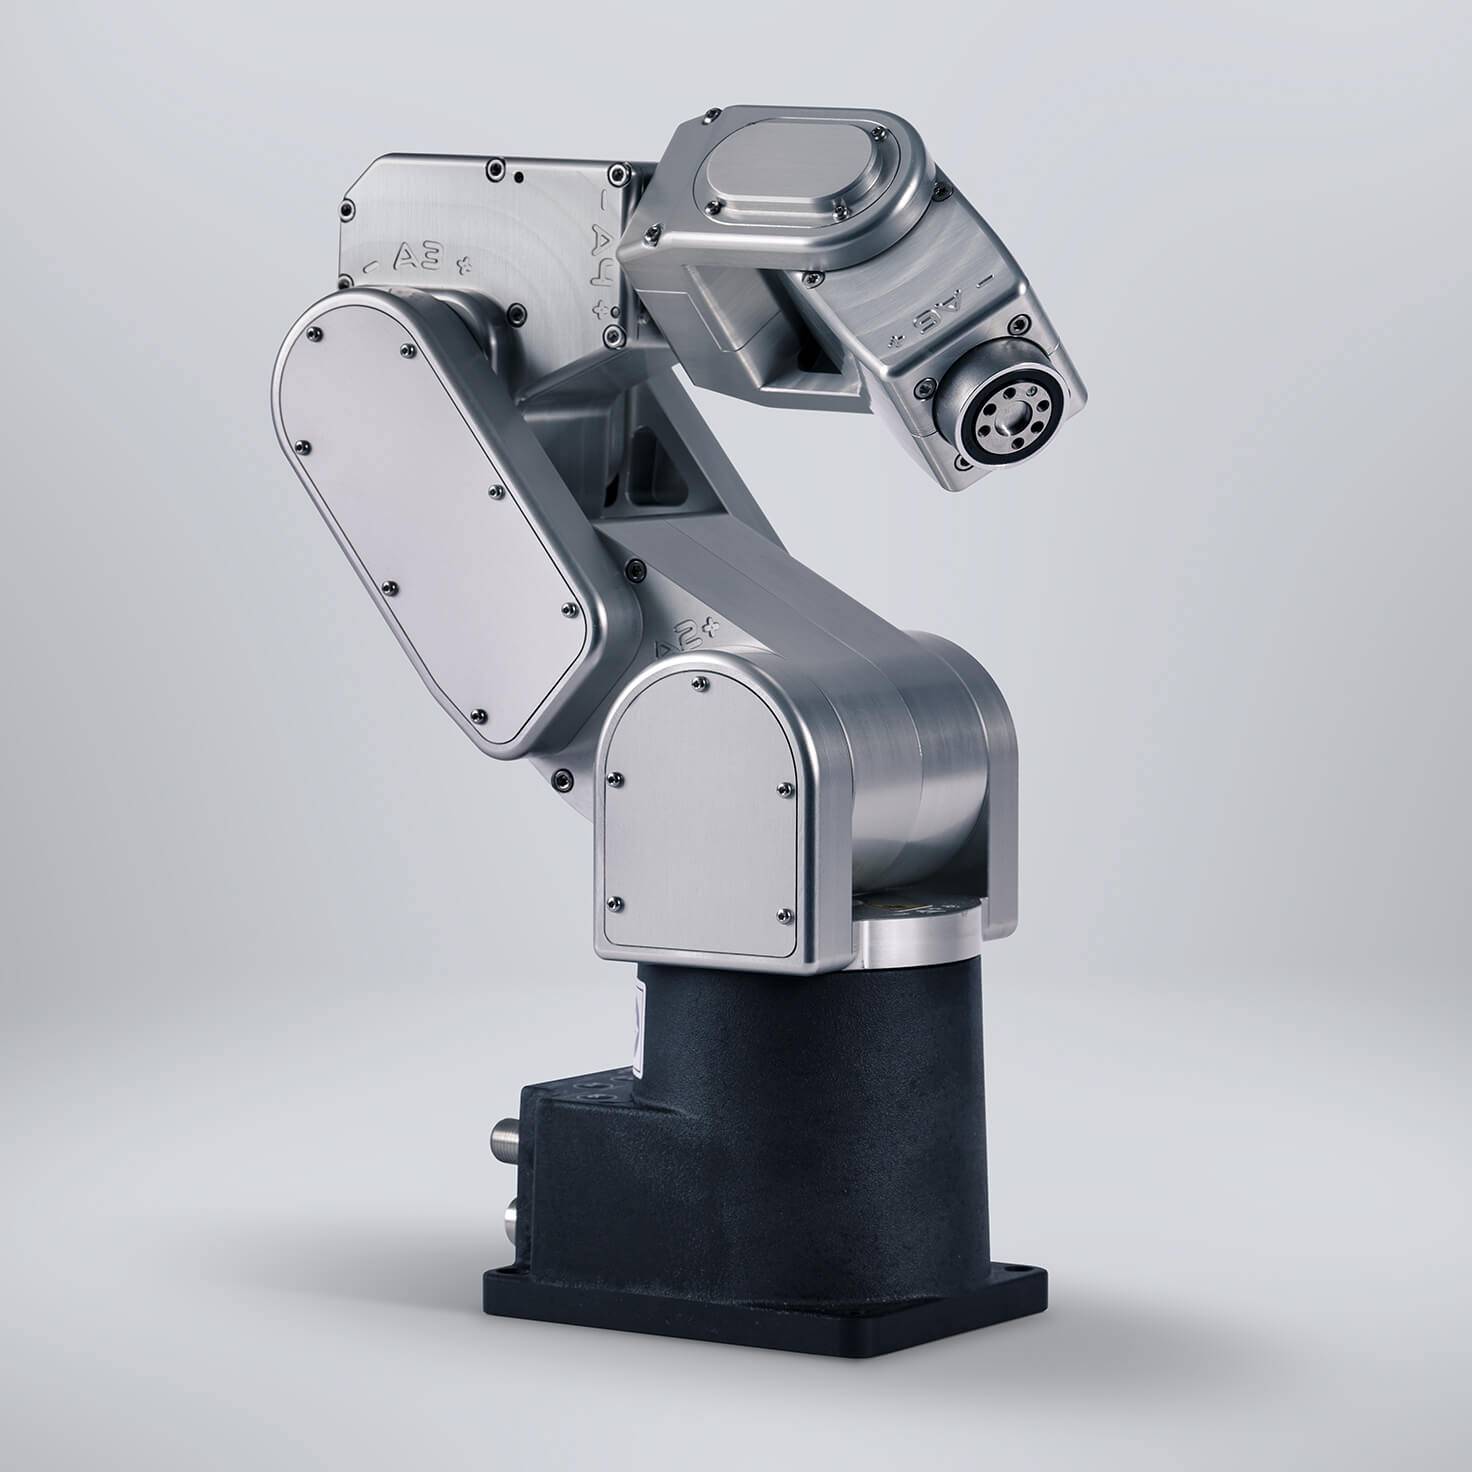 6-Axis Robot Arm 6 DOF Robotic Arm Industrial Mechanical Arm Bracket Unassembled 